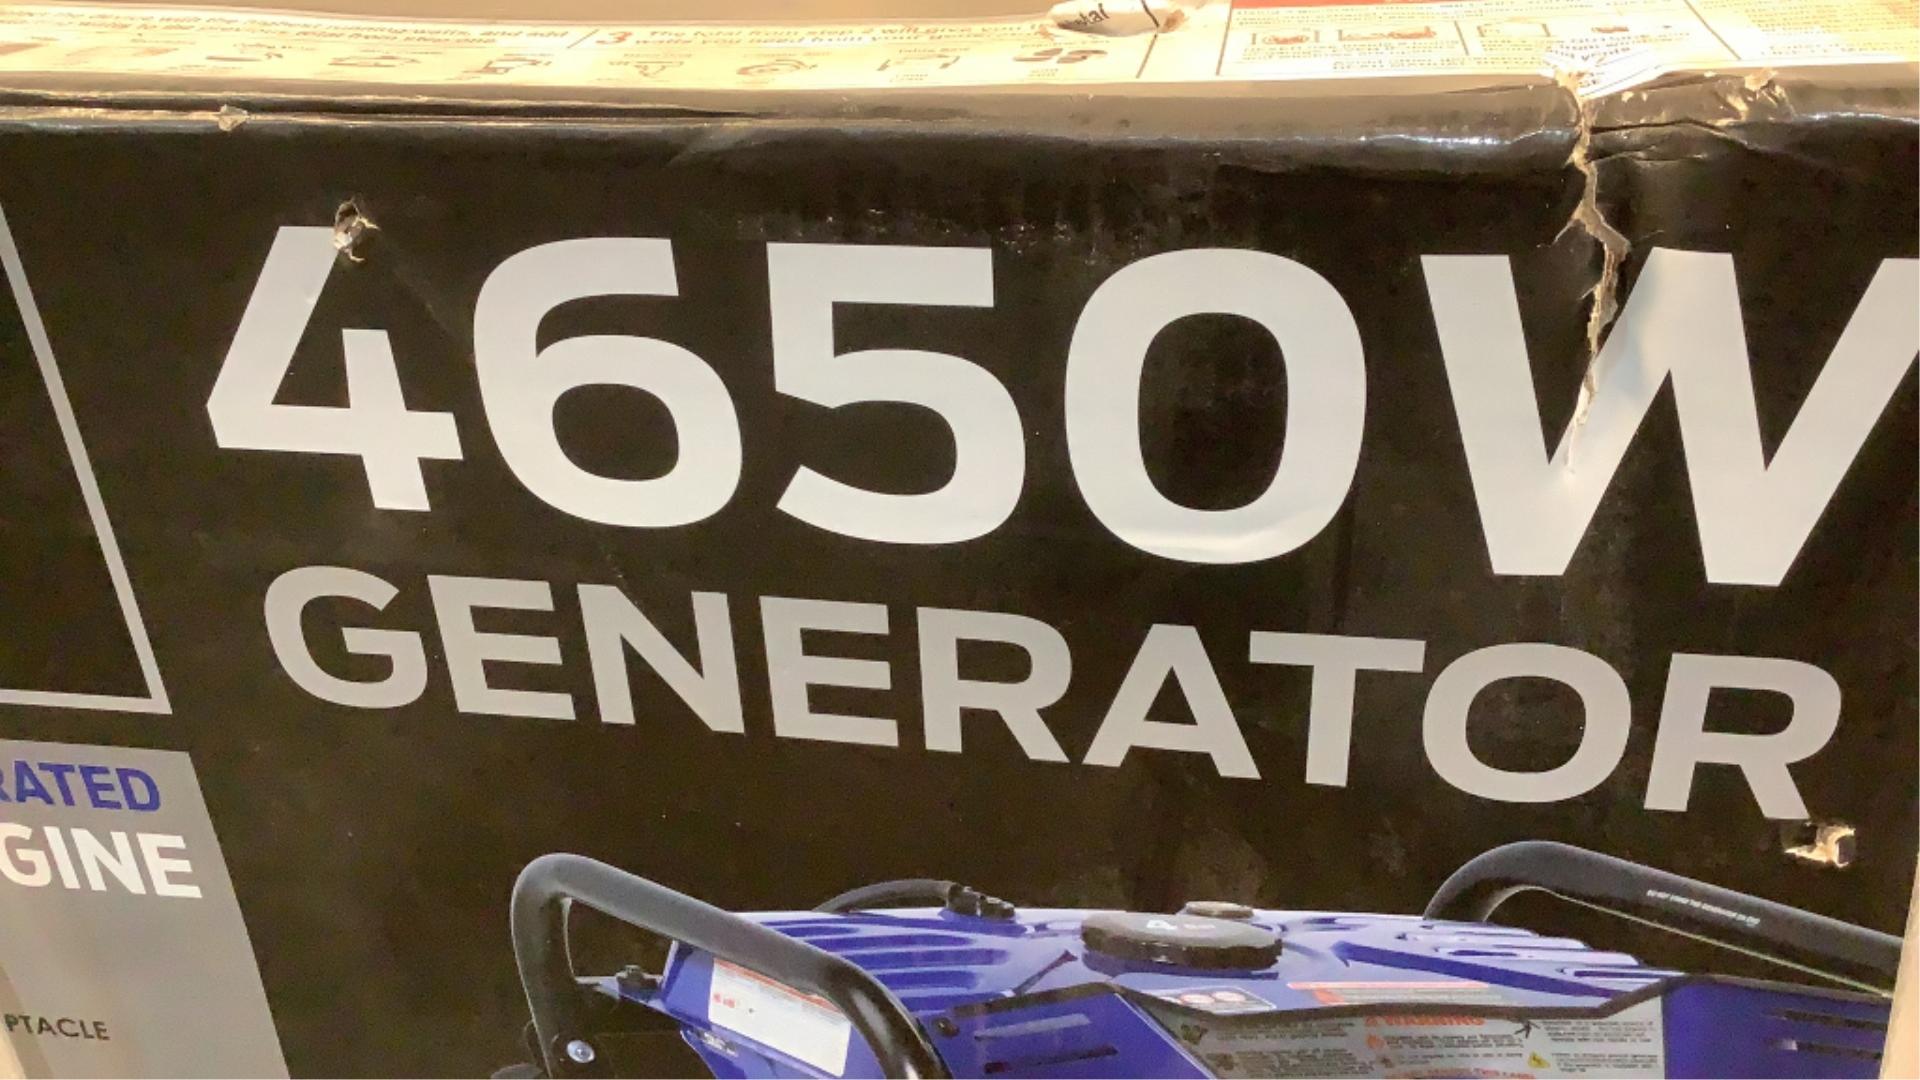 Ford Gas Generator FG4650p